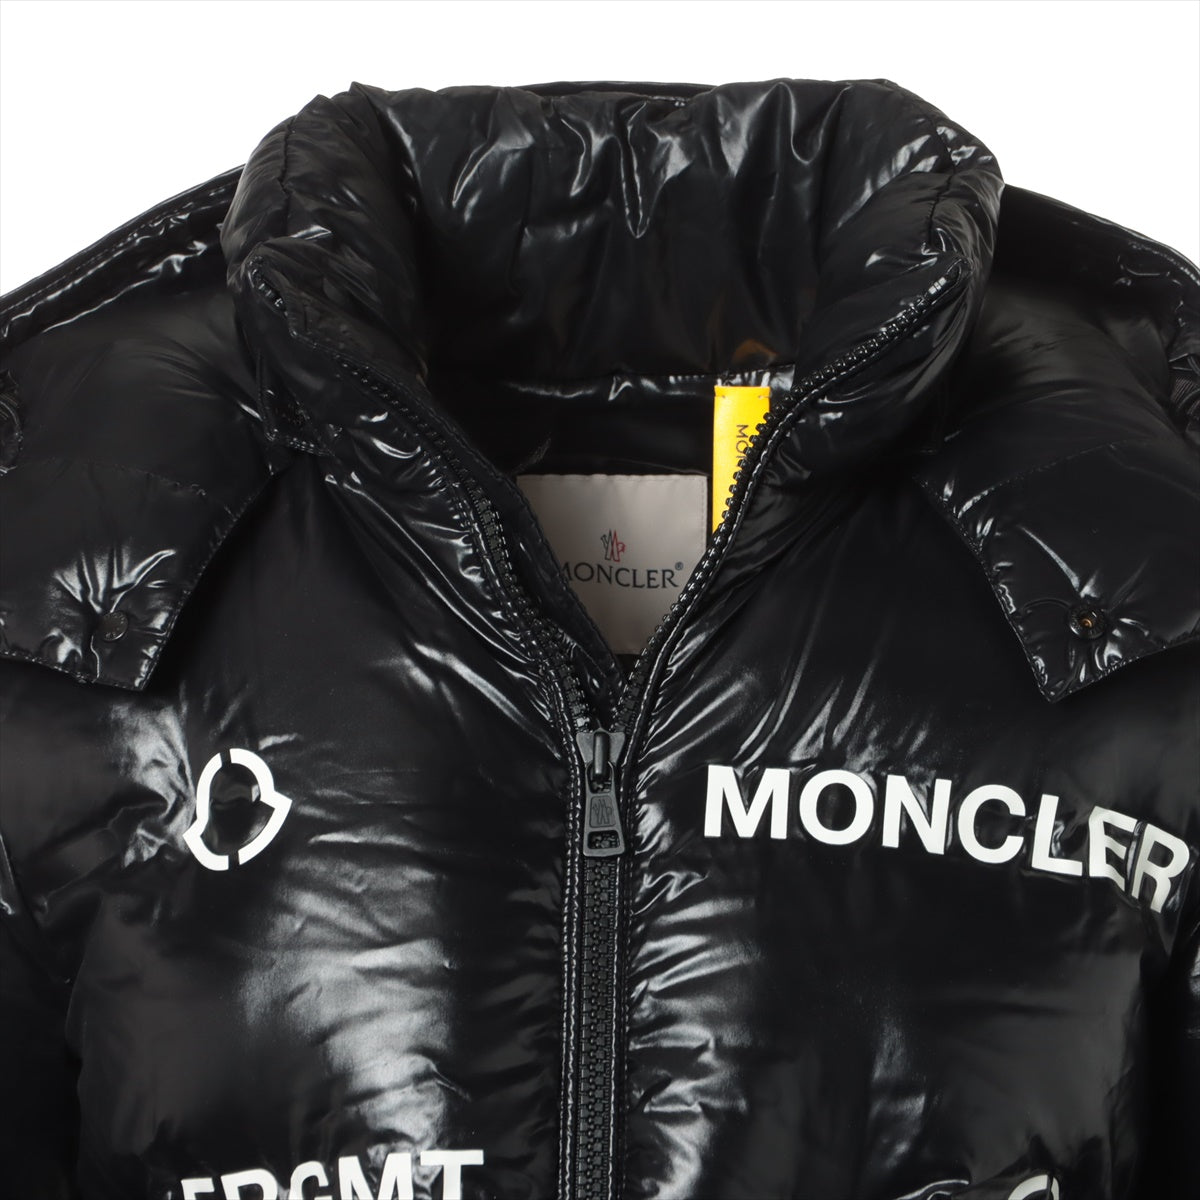 Moncler Genius Fragment MAYCONNE 20 years Nylon Down jacket 1 Men's Black